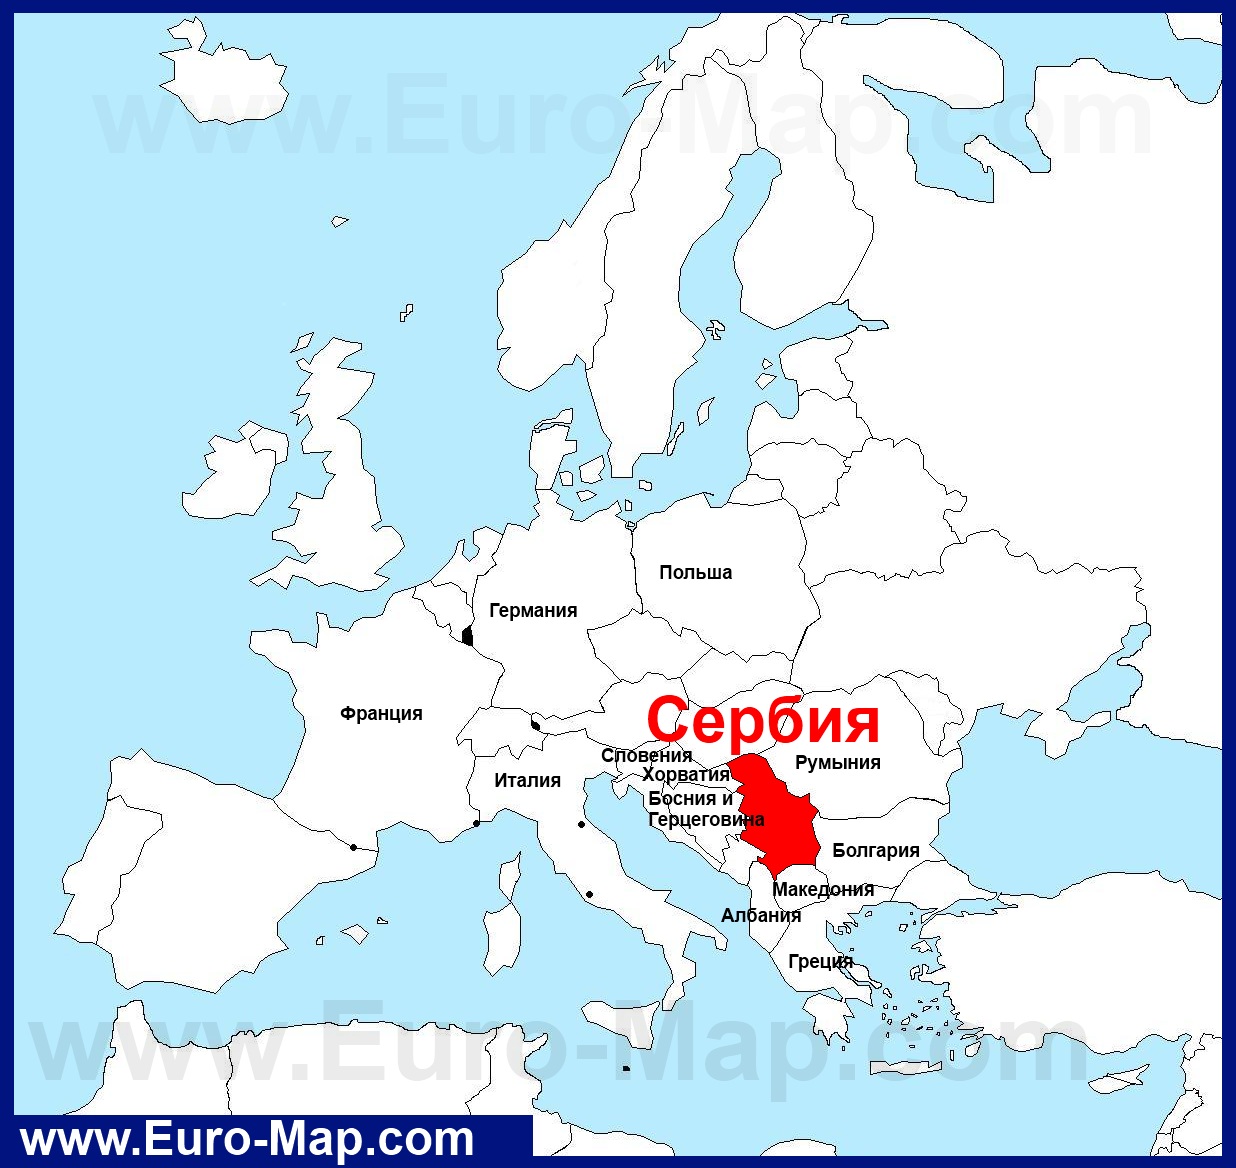 serbia-in-europe